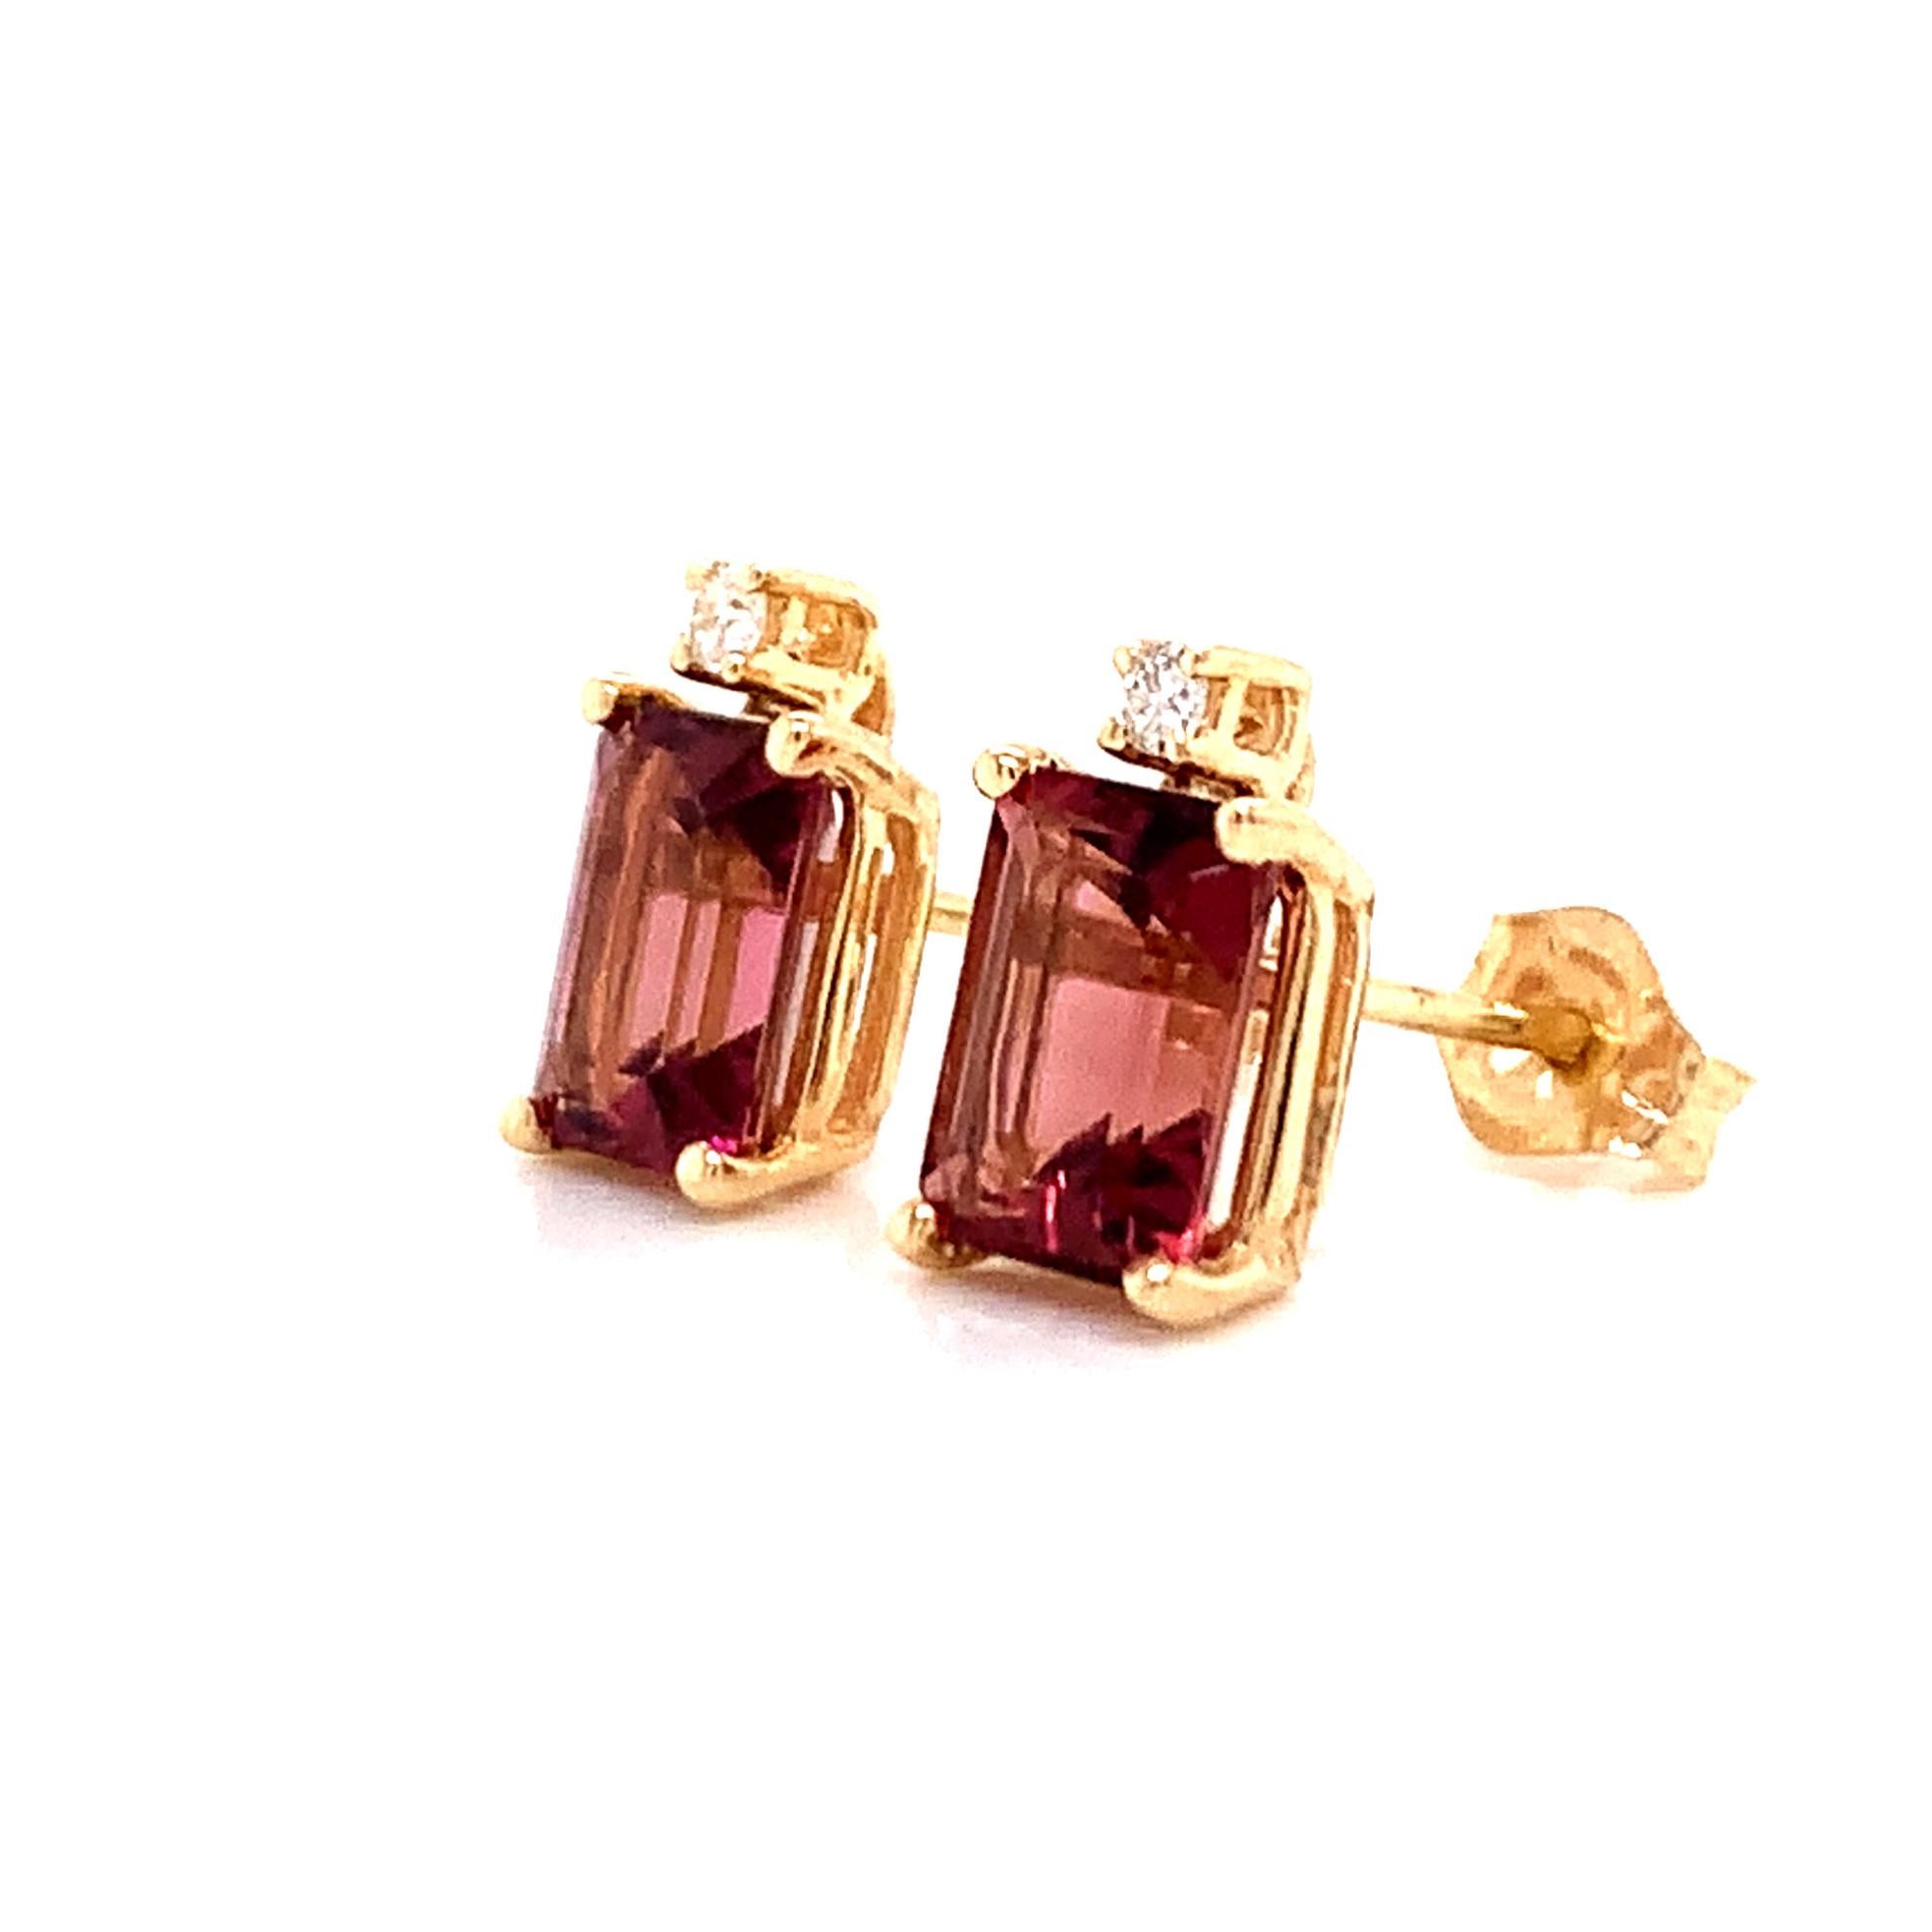 Natural Tourmaline Diamond Earrings 14k Gold 2.13 TCW Certified For Sale 4